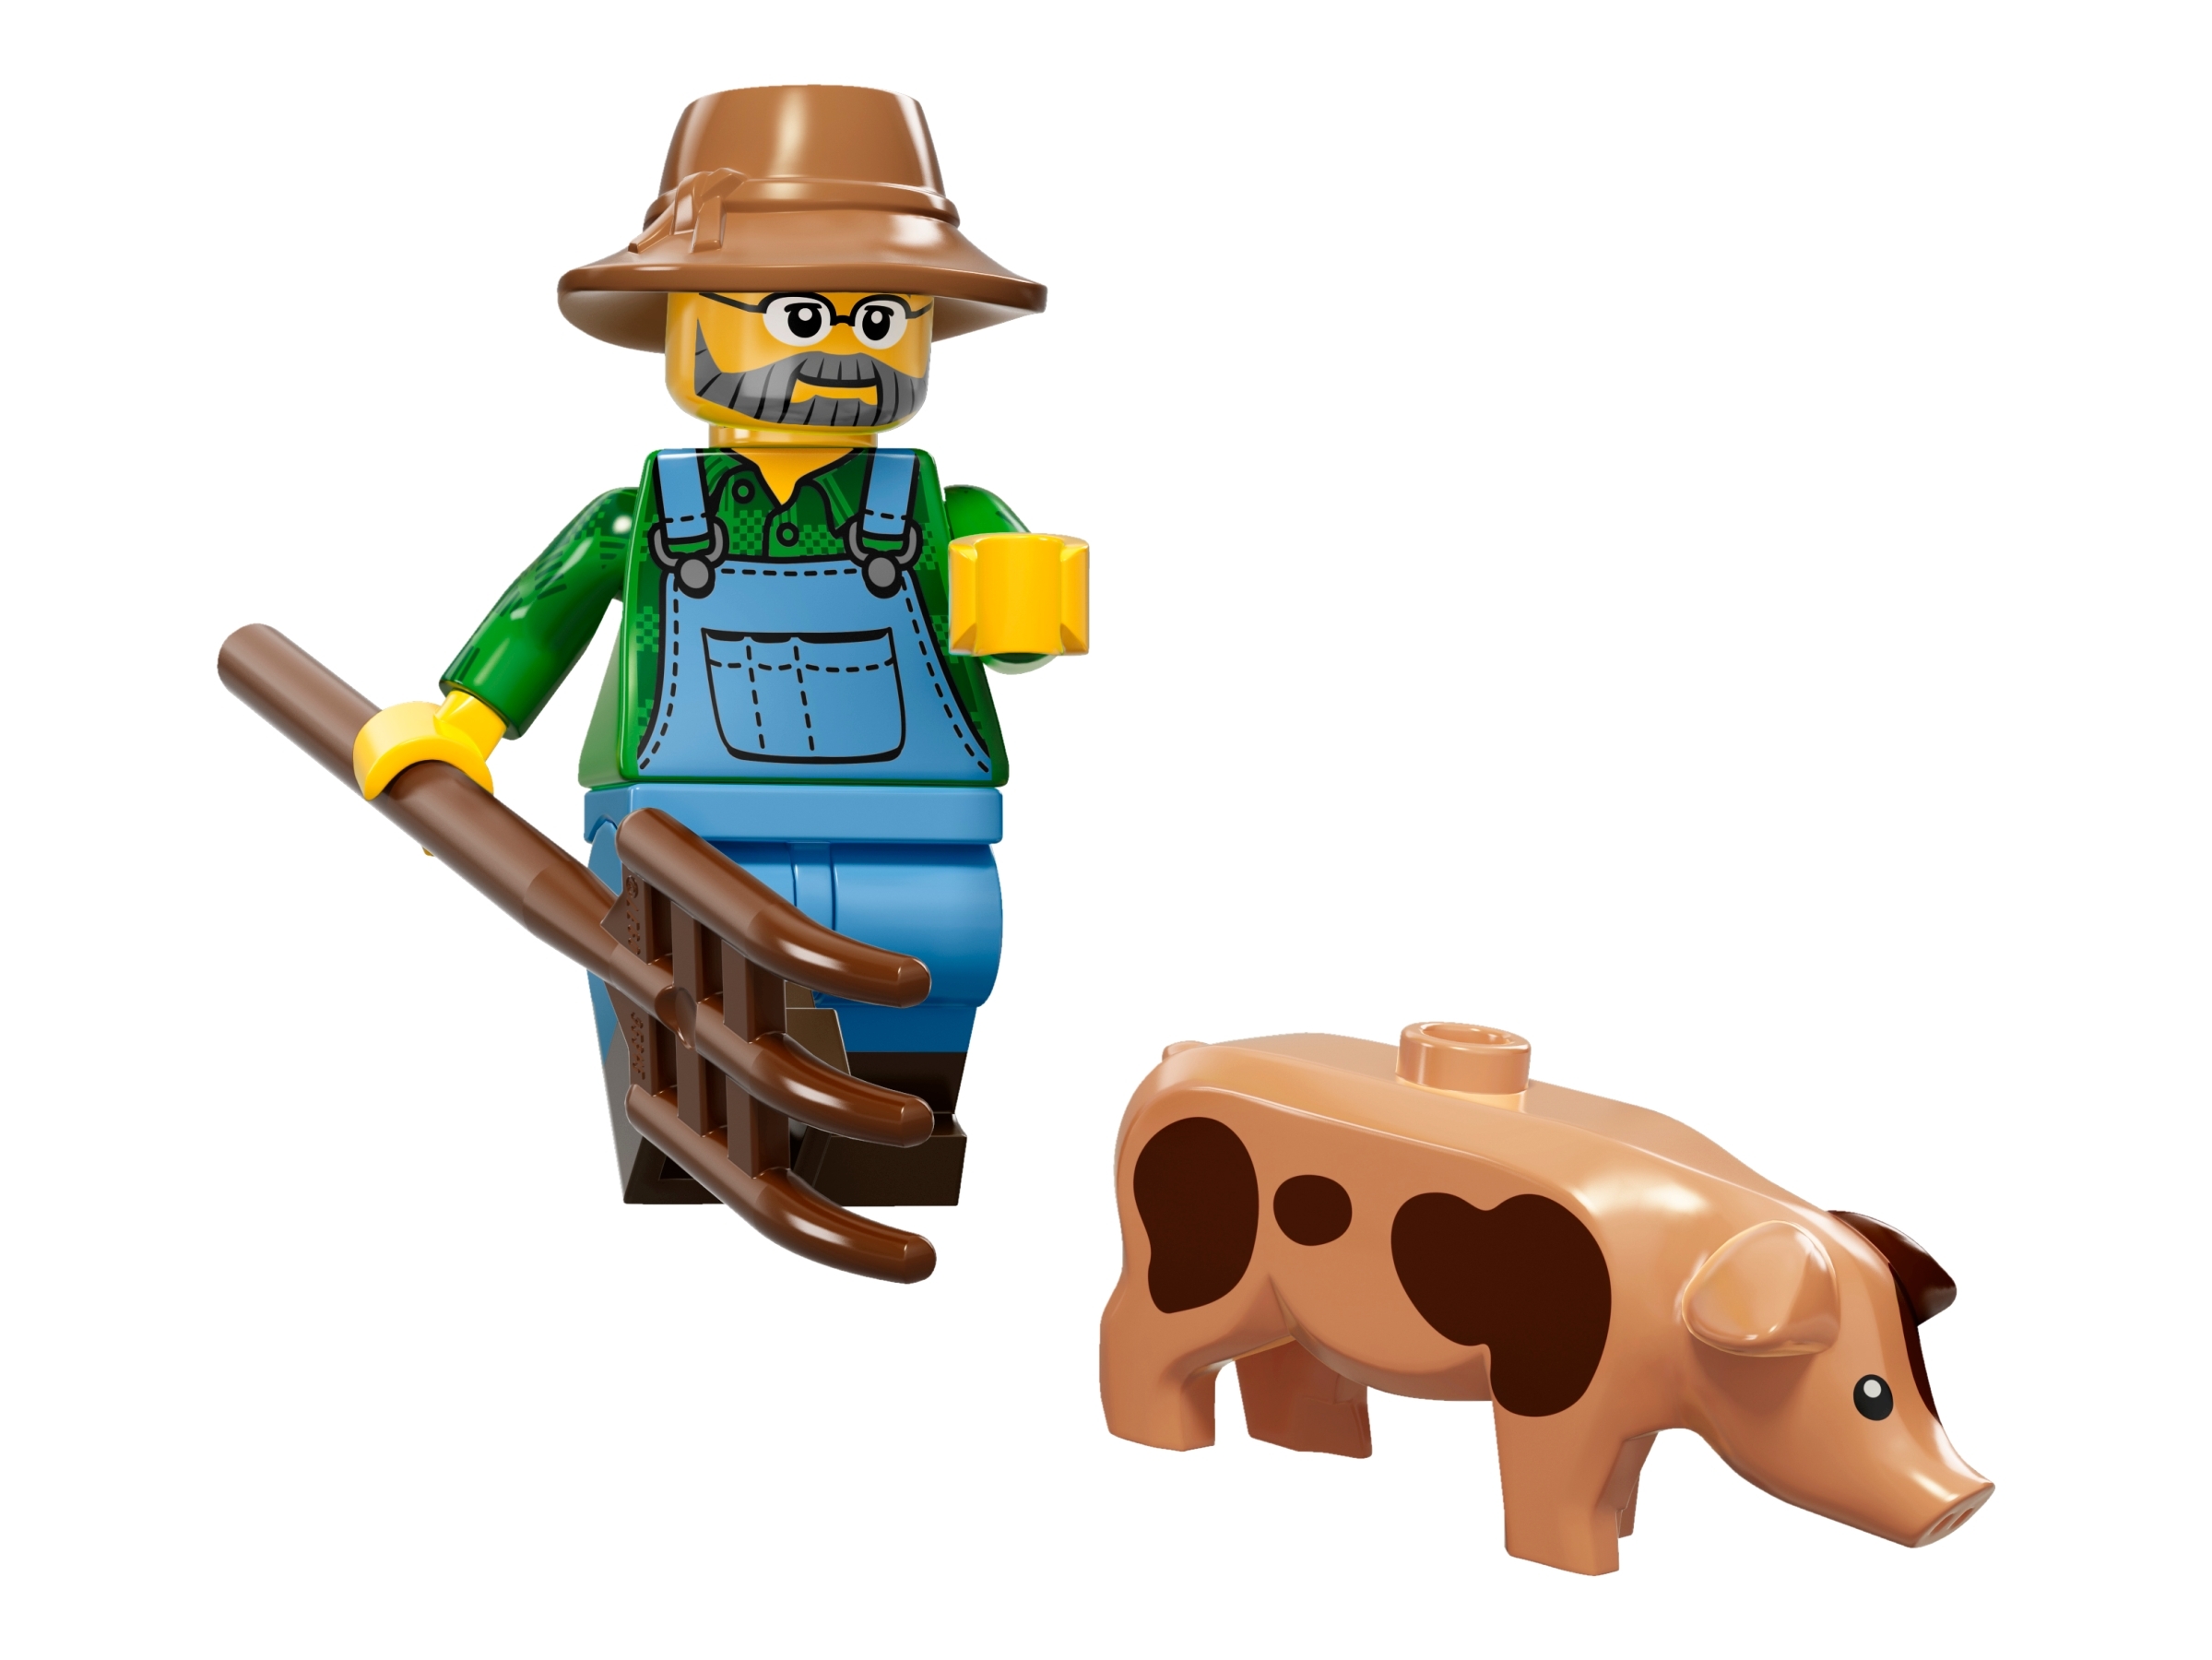 LEGO NEW SERIES 15 JEWEL THIEF 71011 MINIFIGURE ROBBER MINIFIG FIGURE 